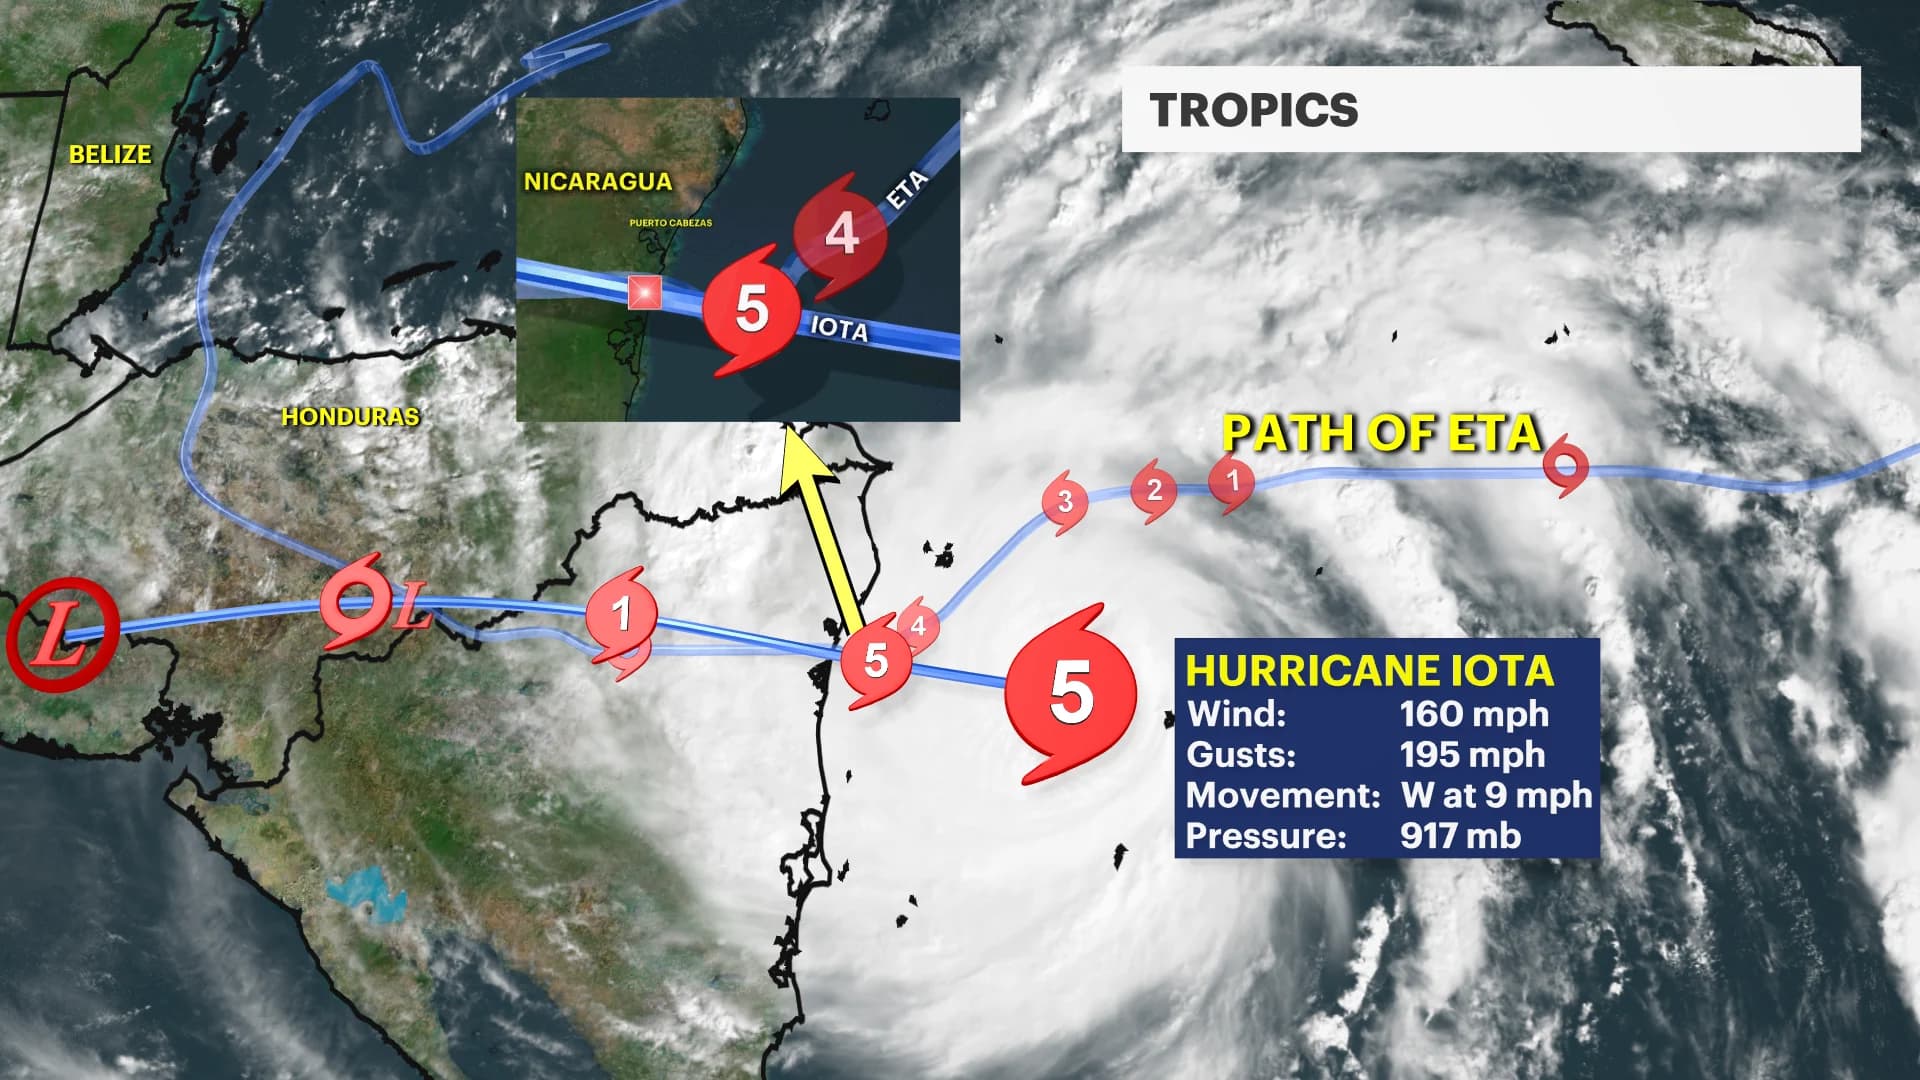 Hurricane Iota approaches Central America as dangerous Category 5 storm, days after Hurricane Eta